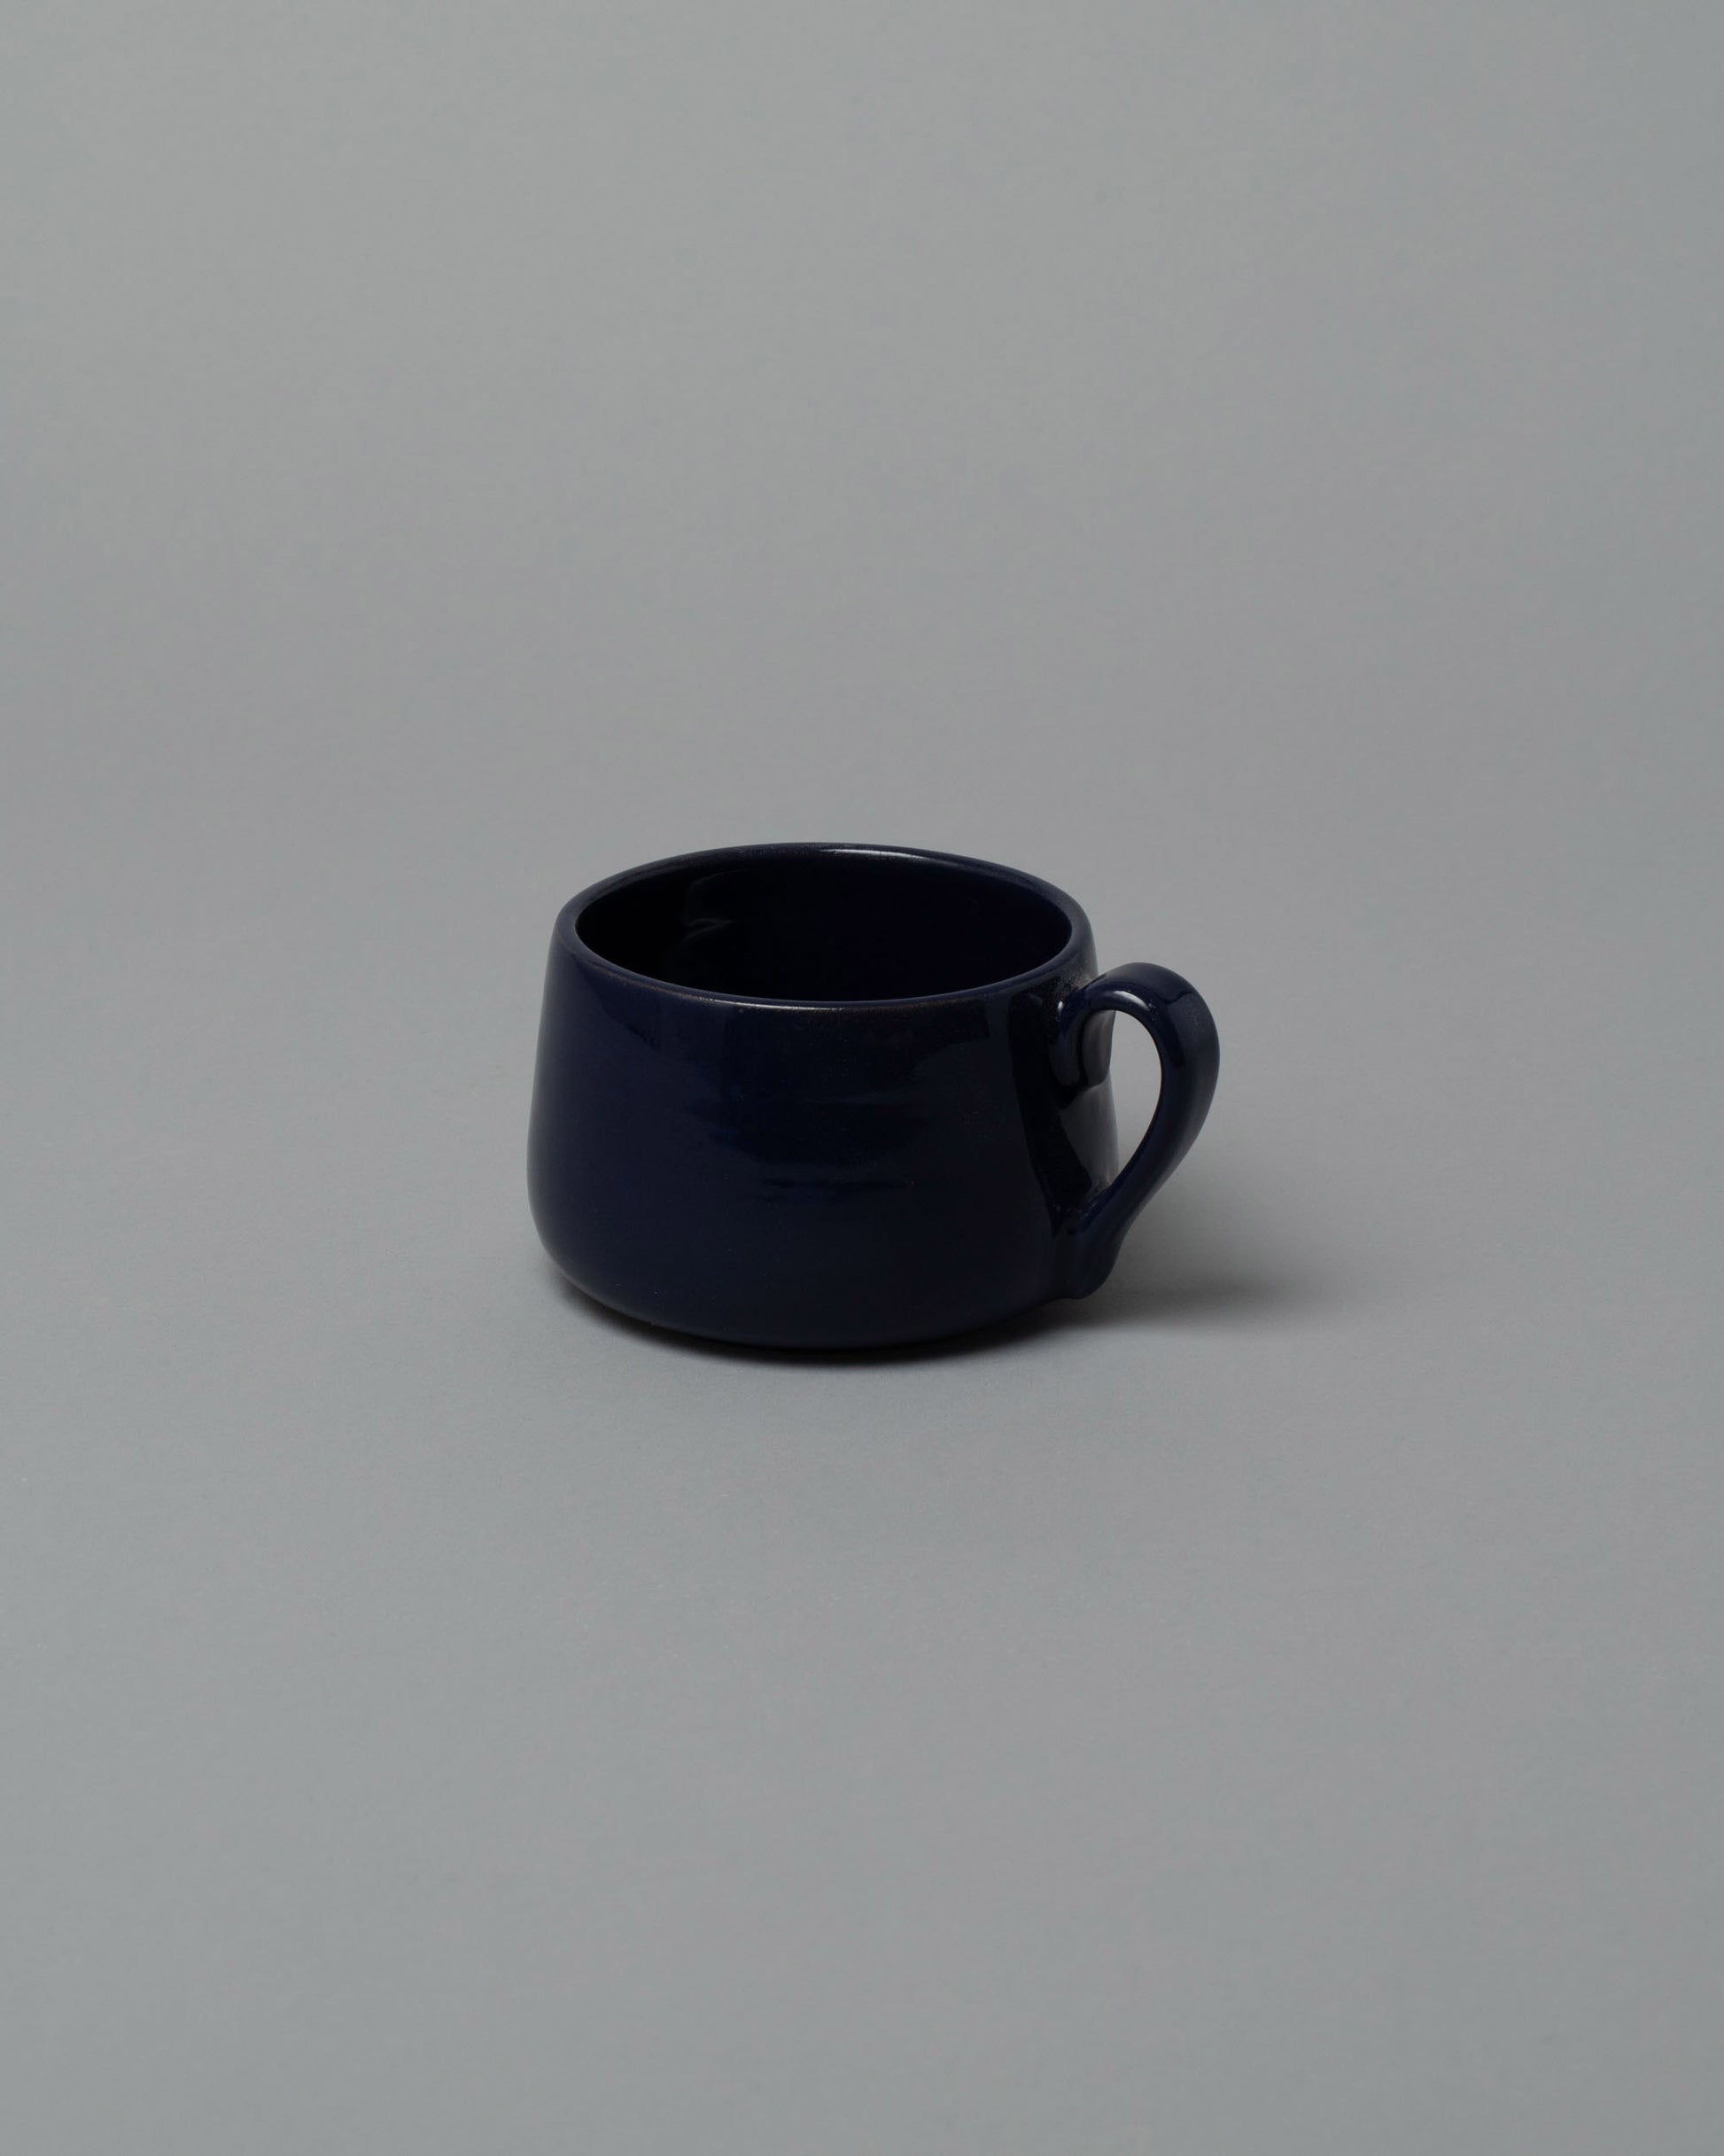 La Ceramica Vincenzo Del Monaco Samples & Imperfects Tea Mug on light color background.